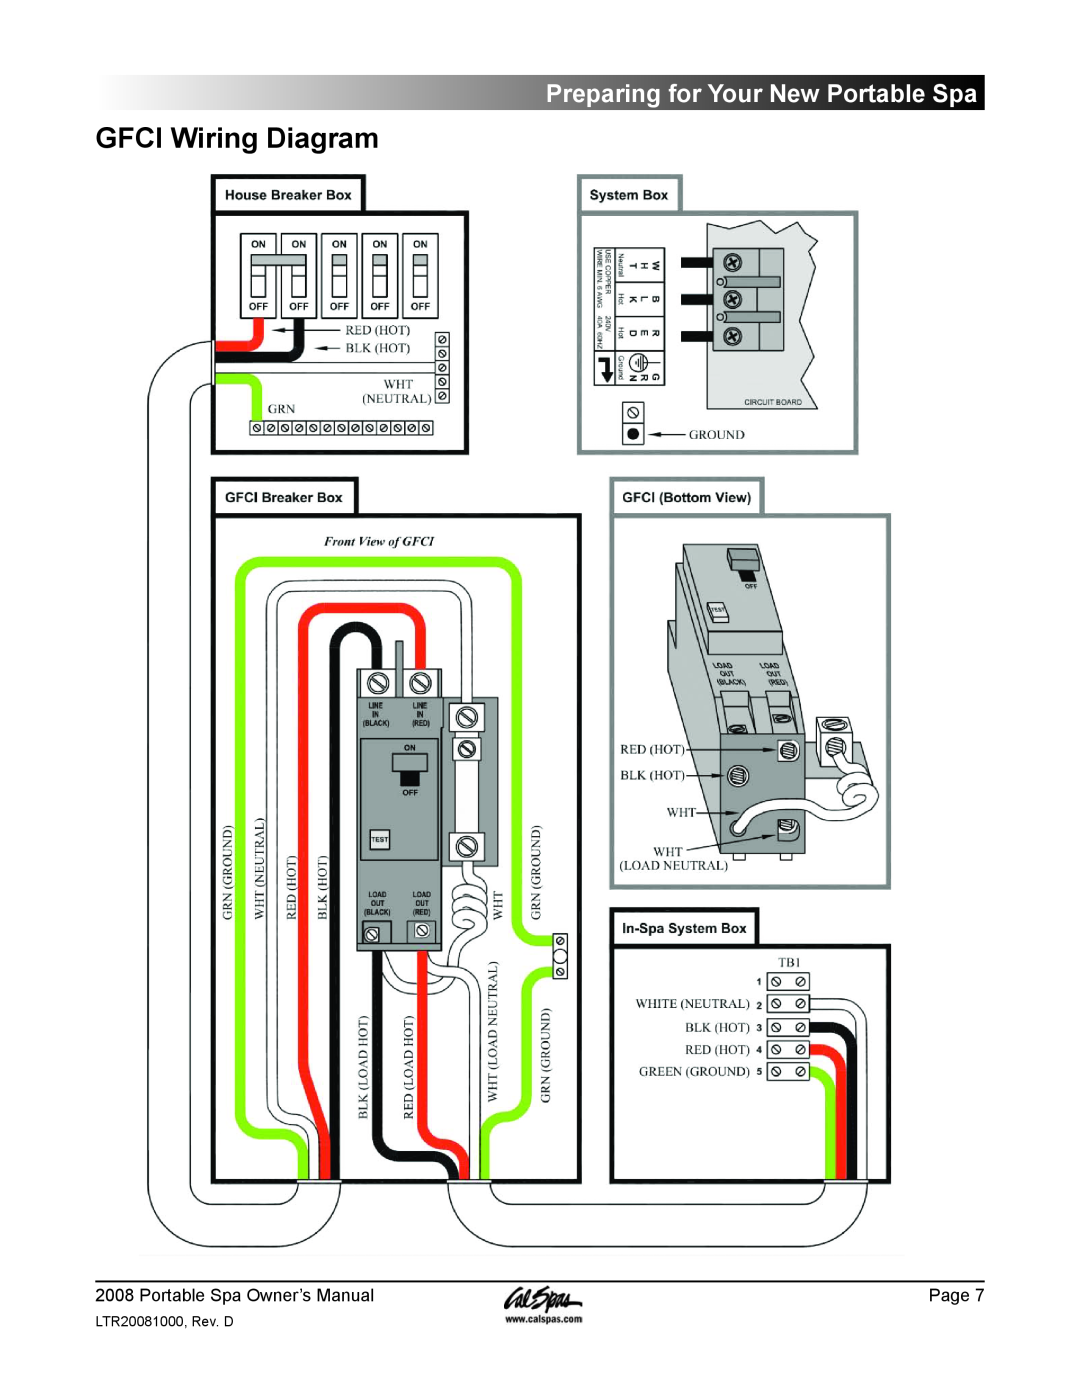 Cal Spas manual GFCI Wiring Diagram, Preparing for Your New Portable Spa 